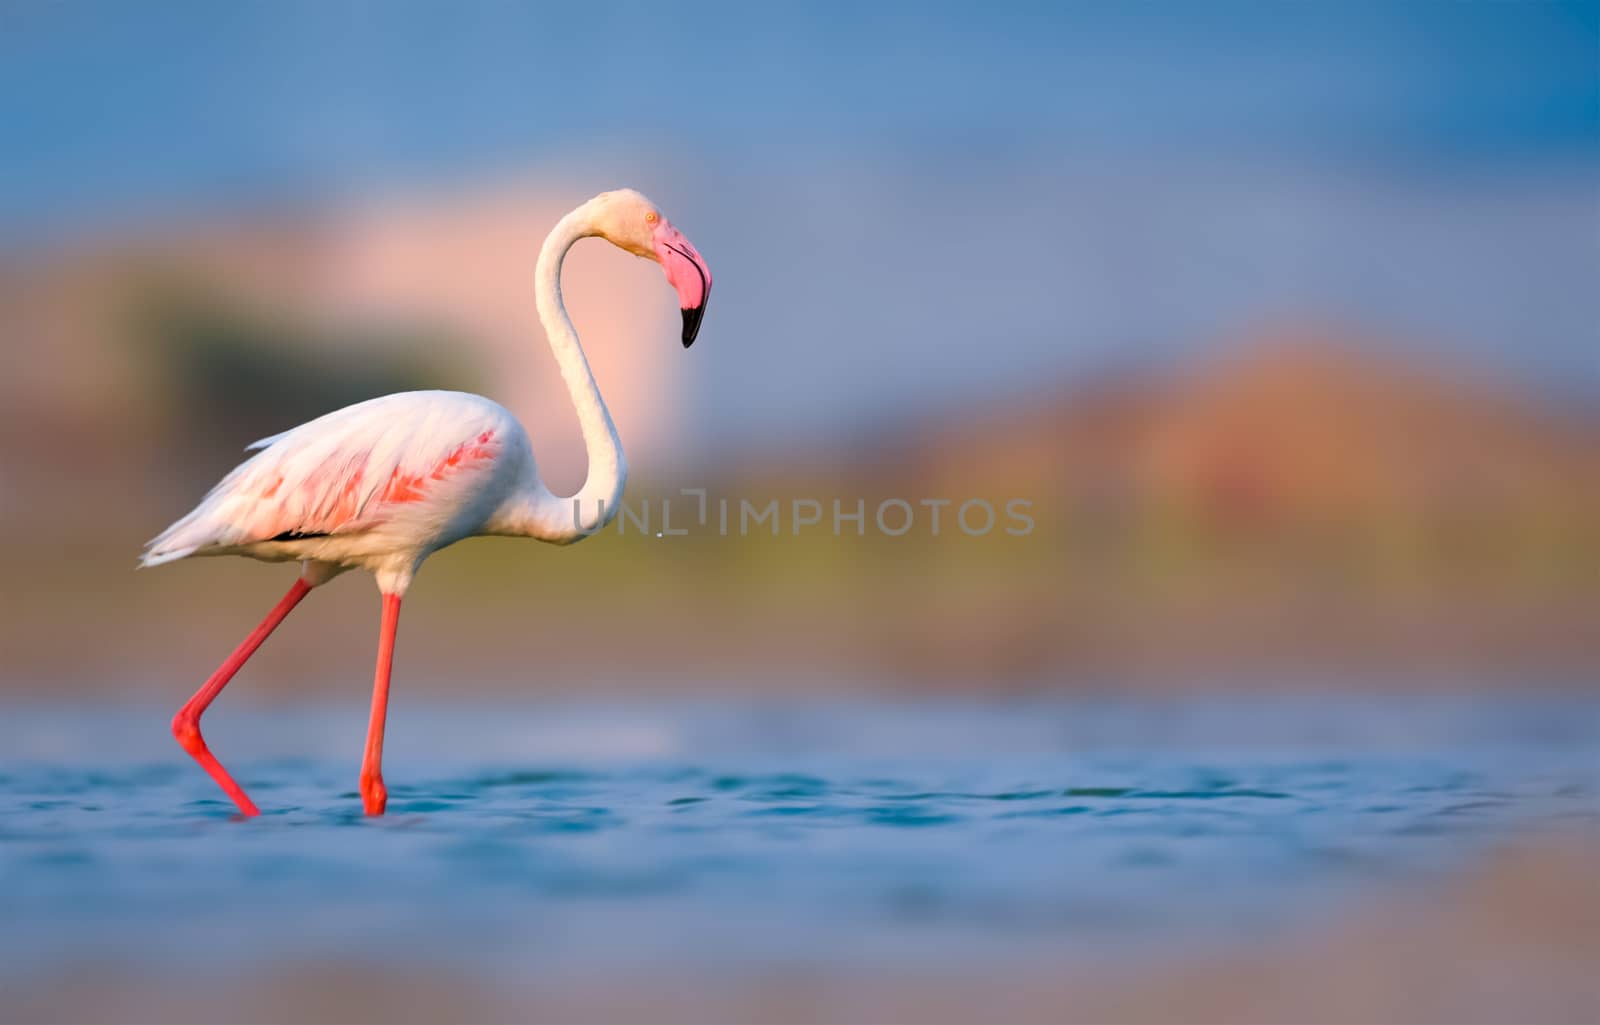 Greater flamingo bird wading in lake on dusky evening by rkbalaji